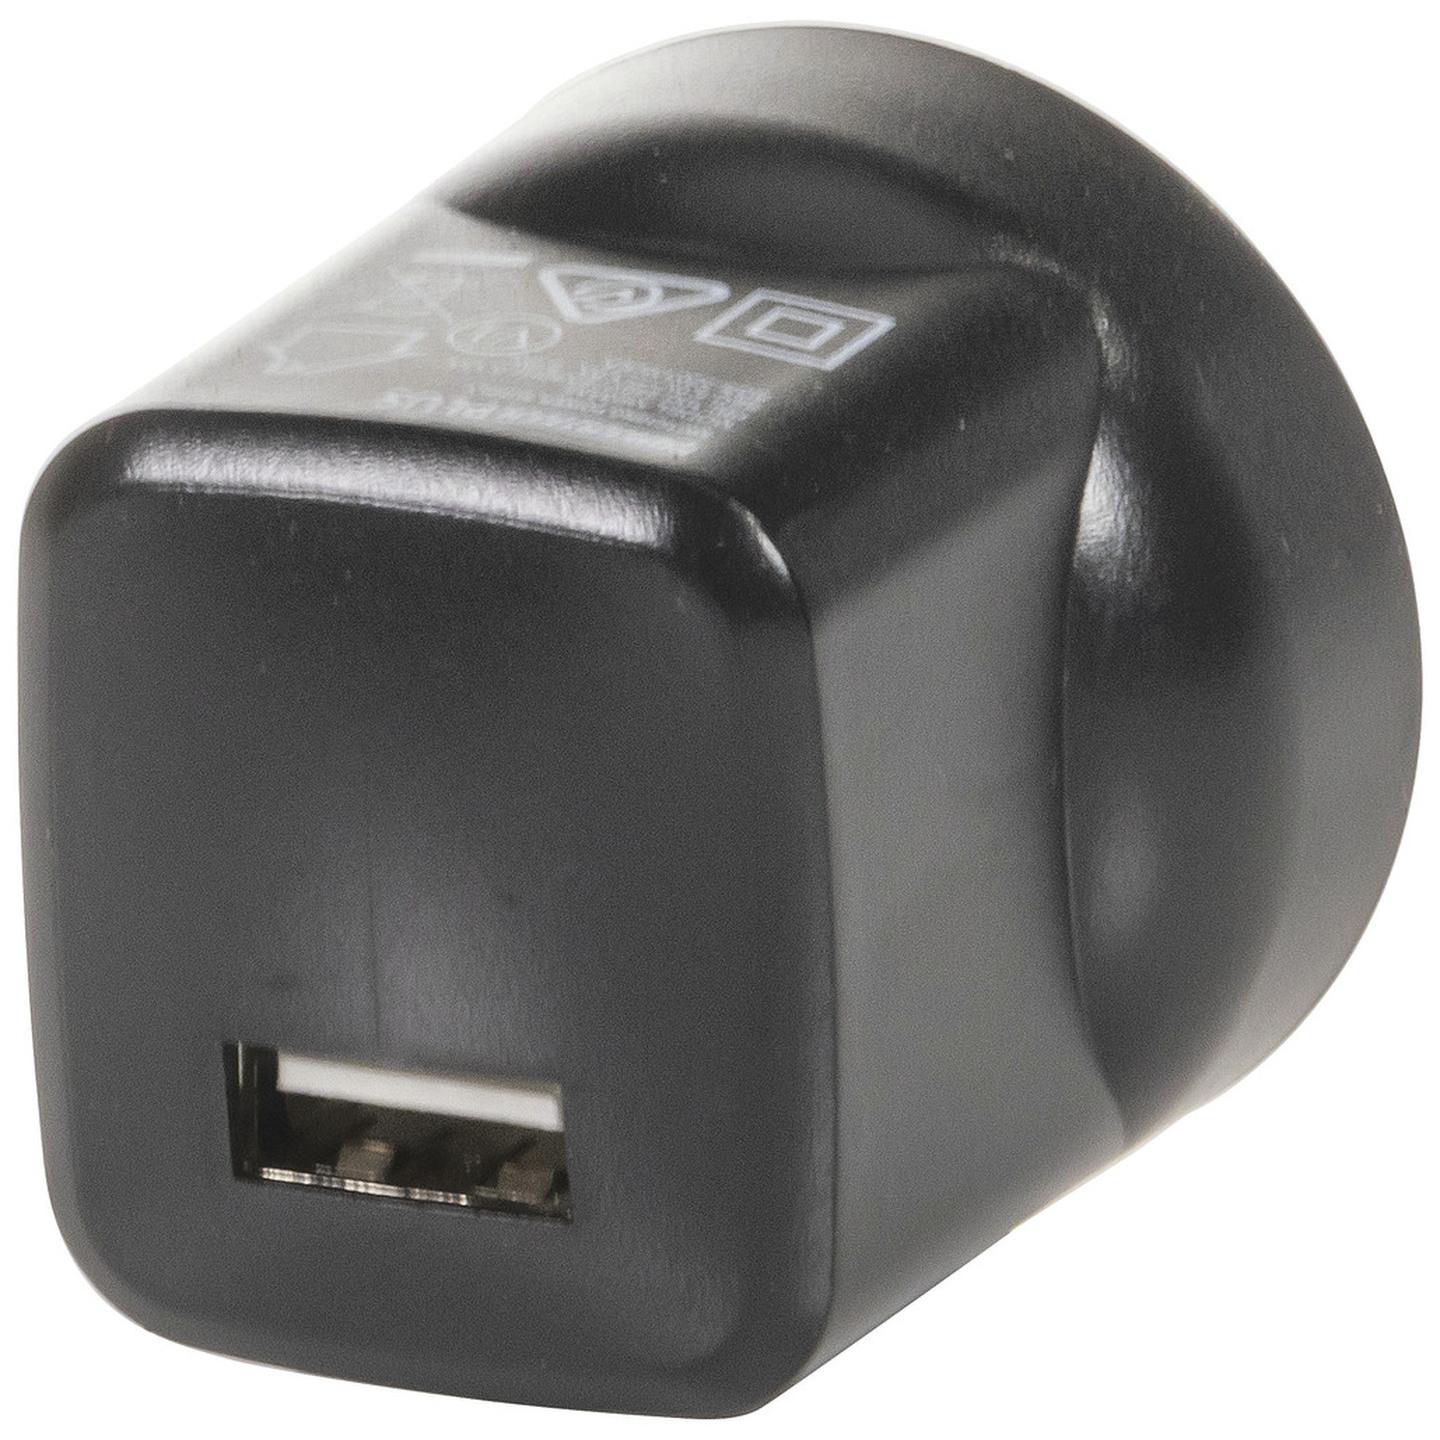 Mains USB Mini Power Adaptor - 1A